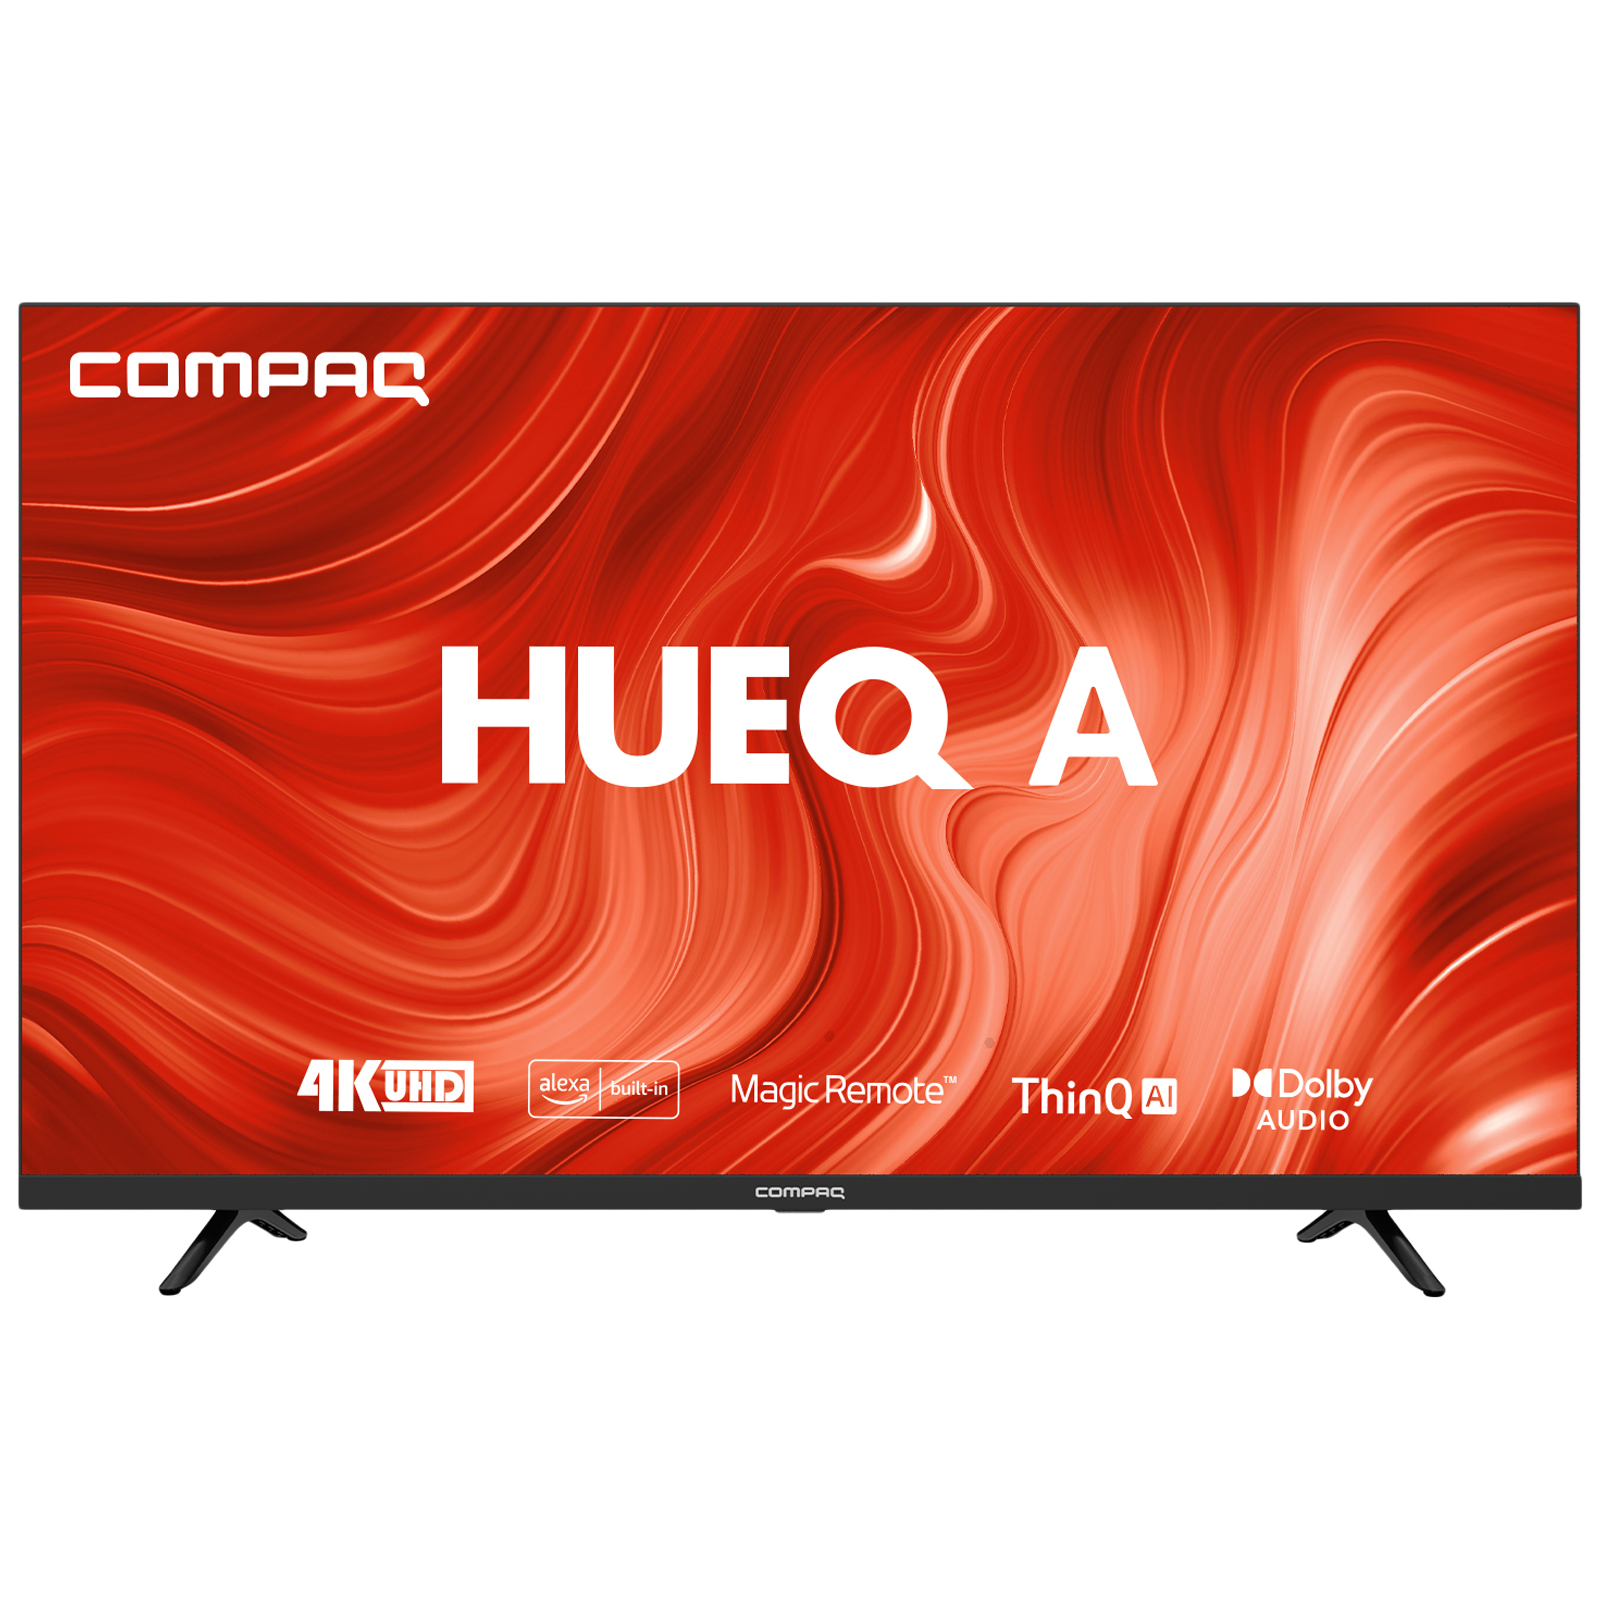 Compaq HUEQ A 126 cm (50 inch) 4K Ultra HD webOS TV with Dolby Audio (2022 model)